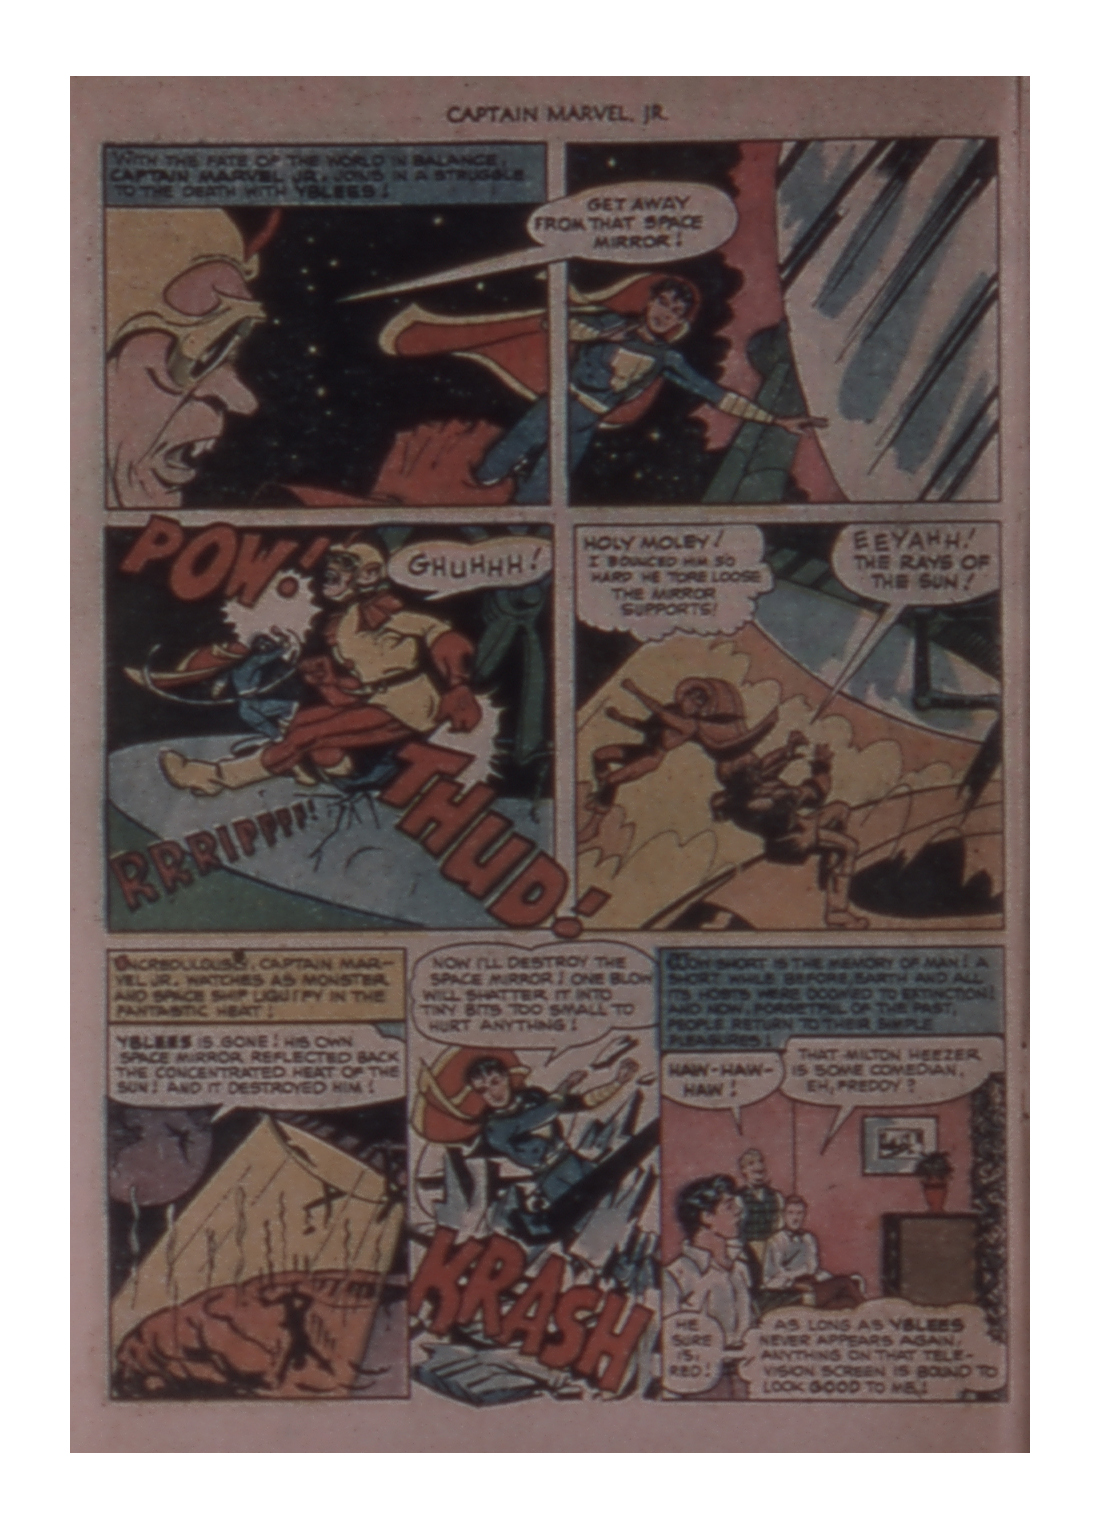 Read online Captain Marvel, Jr. comic -  Issue #109 - 10